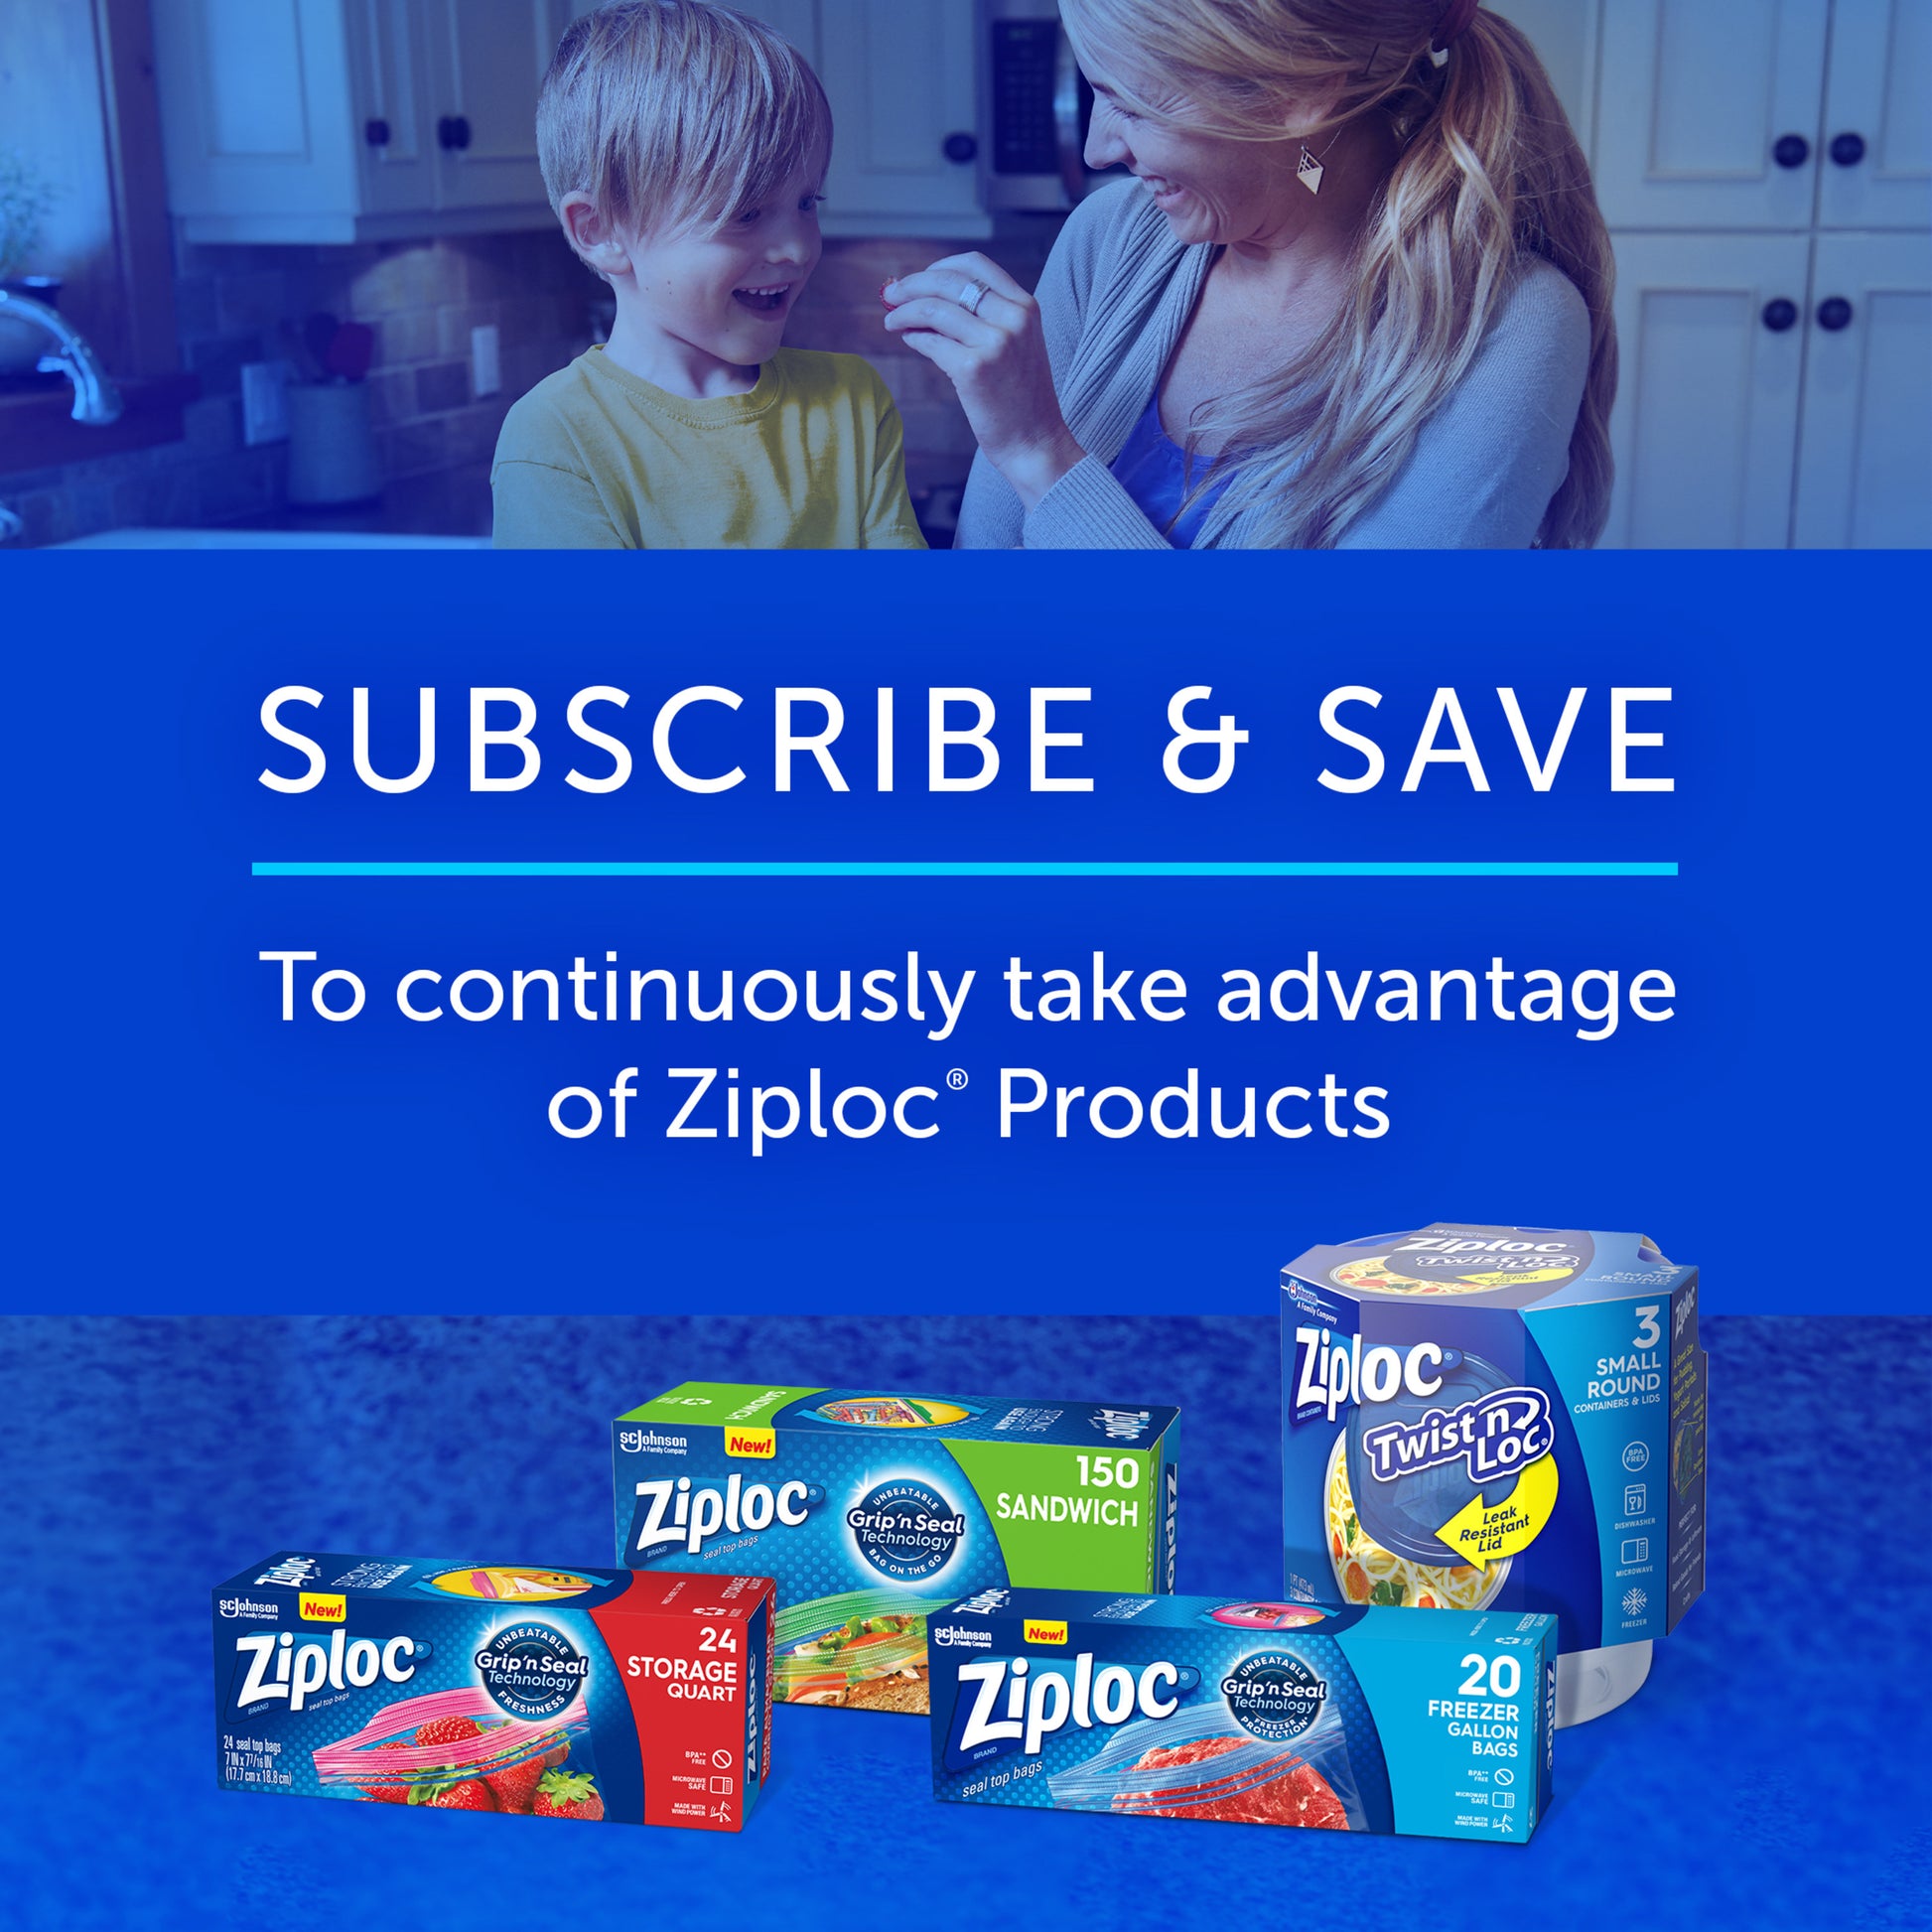 Ziploc Brand, Food Storage Containers with Lids, Twist n Loc